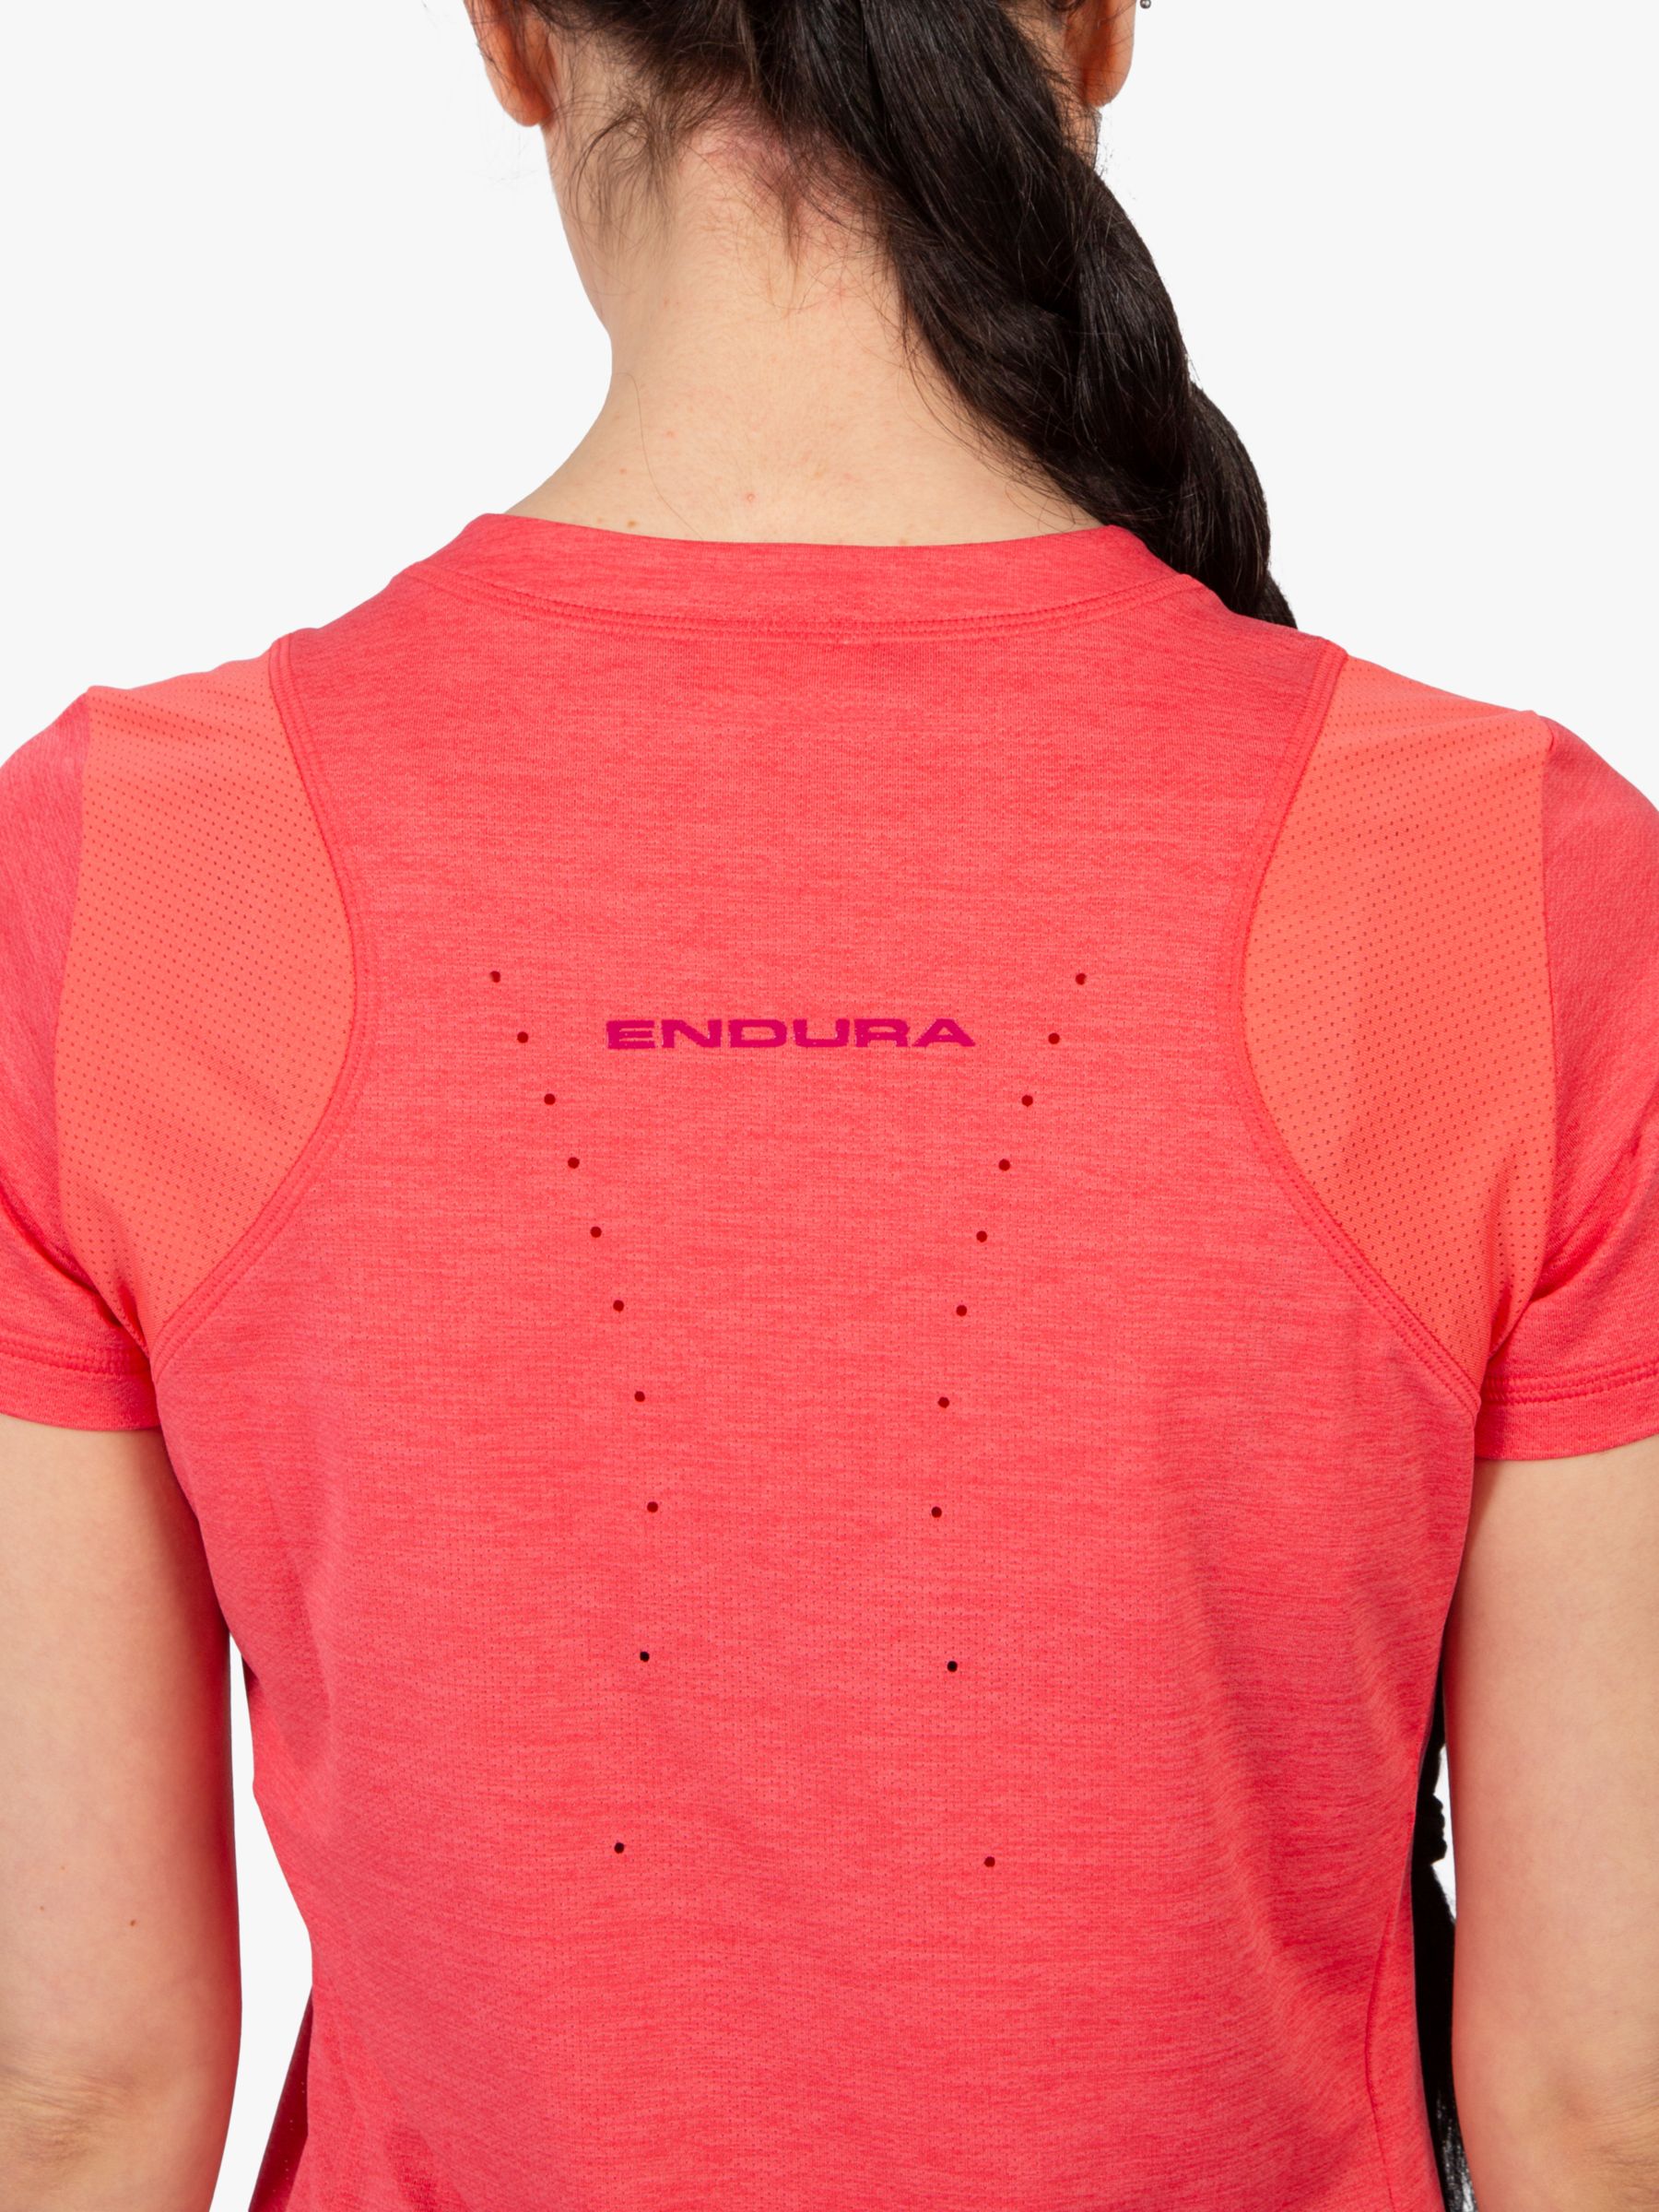 Buy Endura Women's SingleTrack Short Sleeve Jersey Online at johnlewis.com